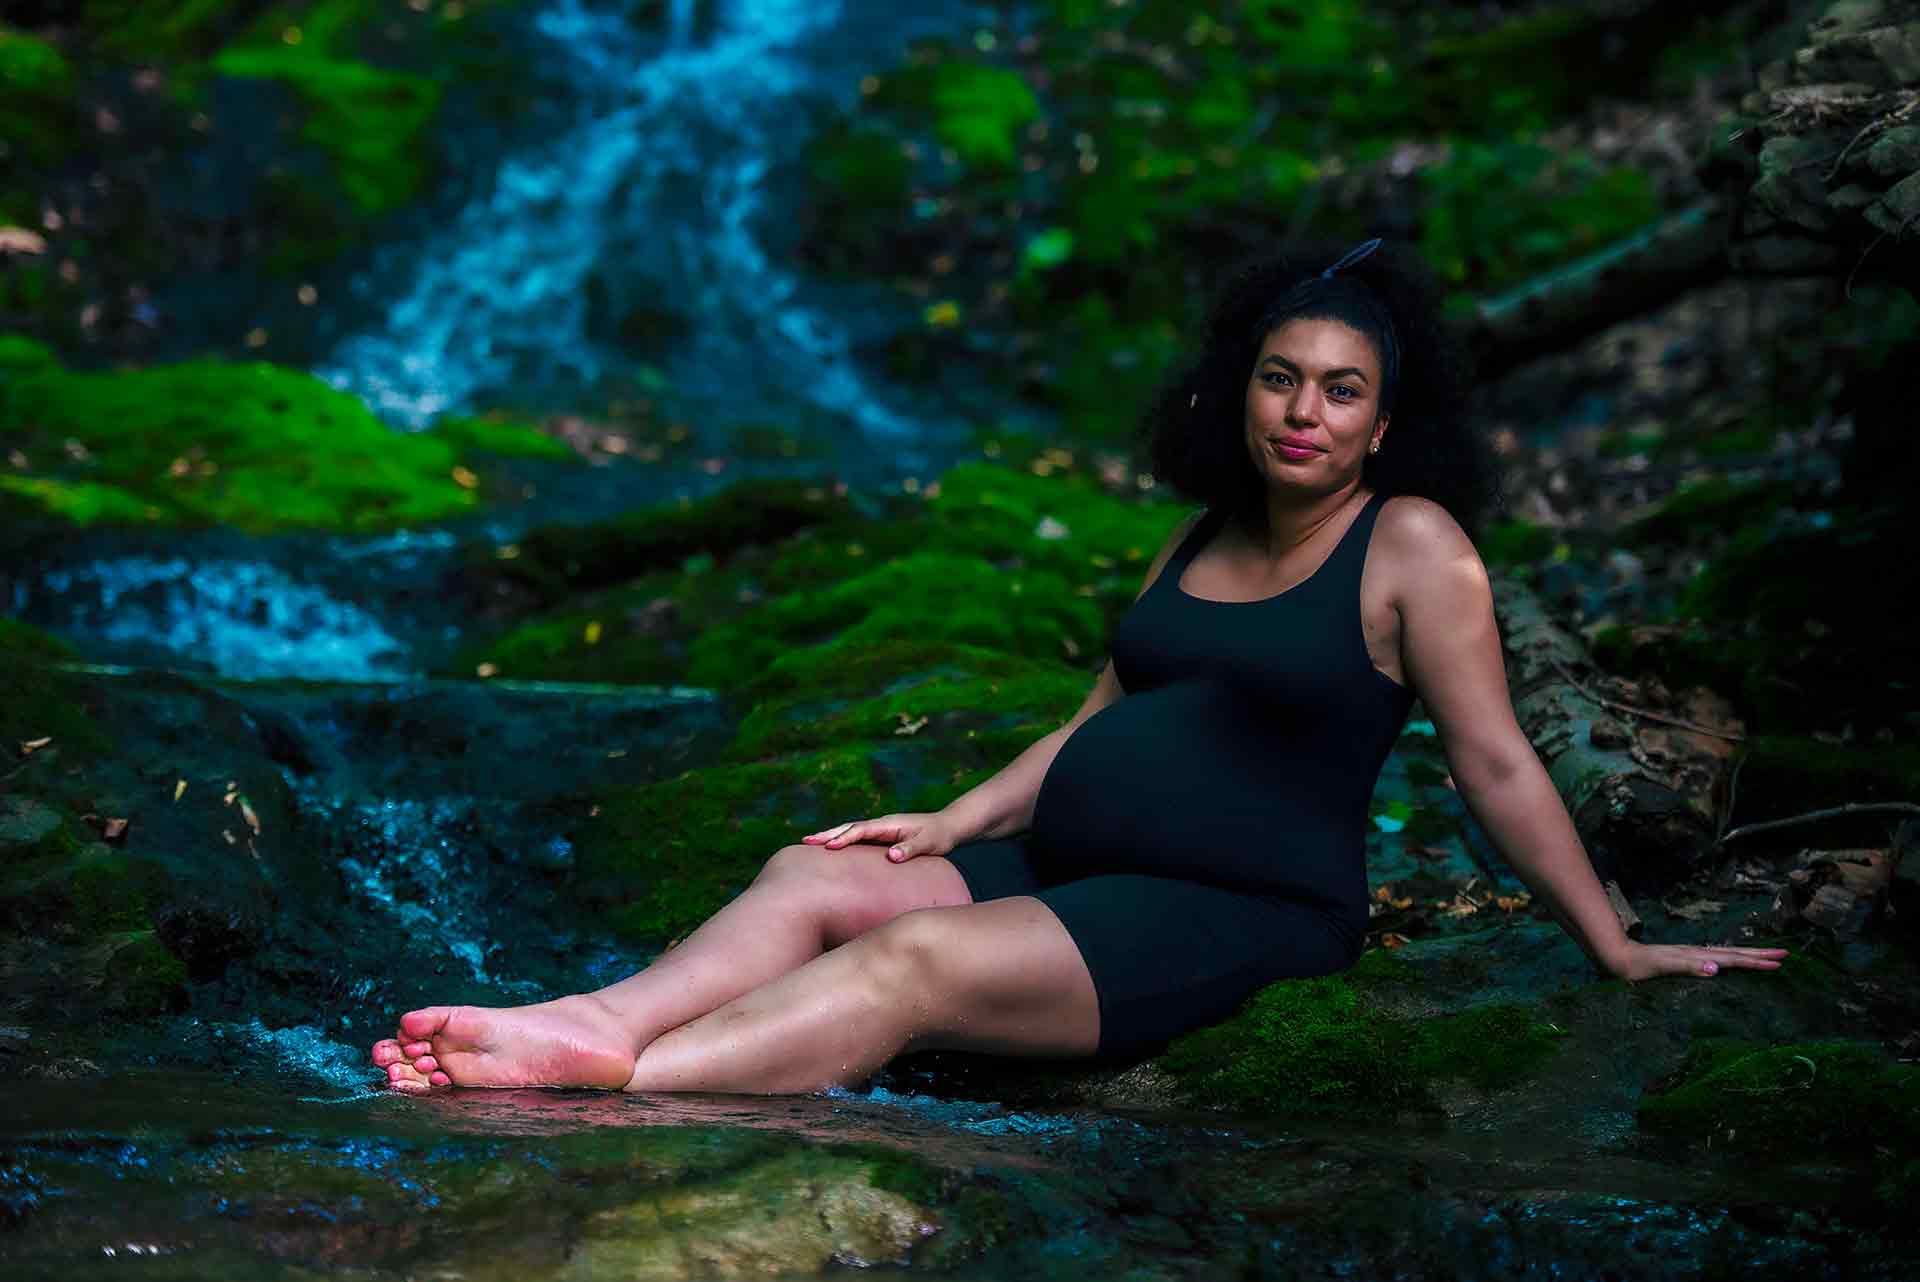 Maternity Photography Portfolio | Amika Gair | Newborn Photographer | West Hartford, Ct